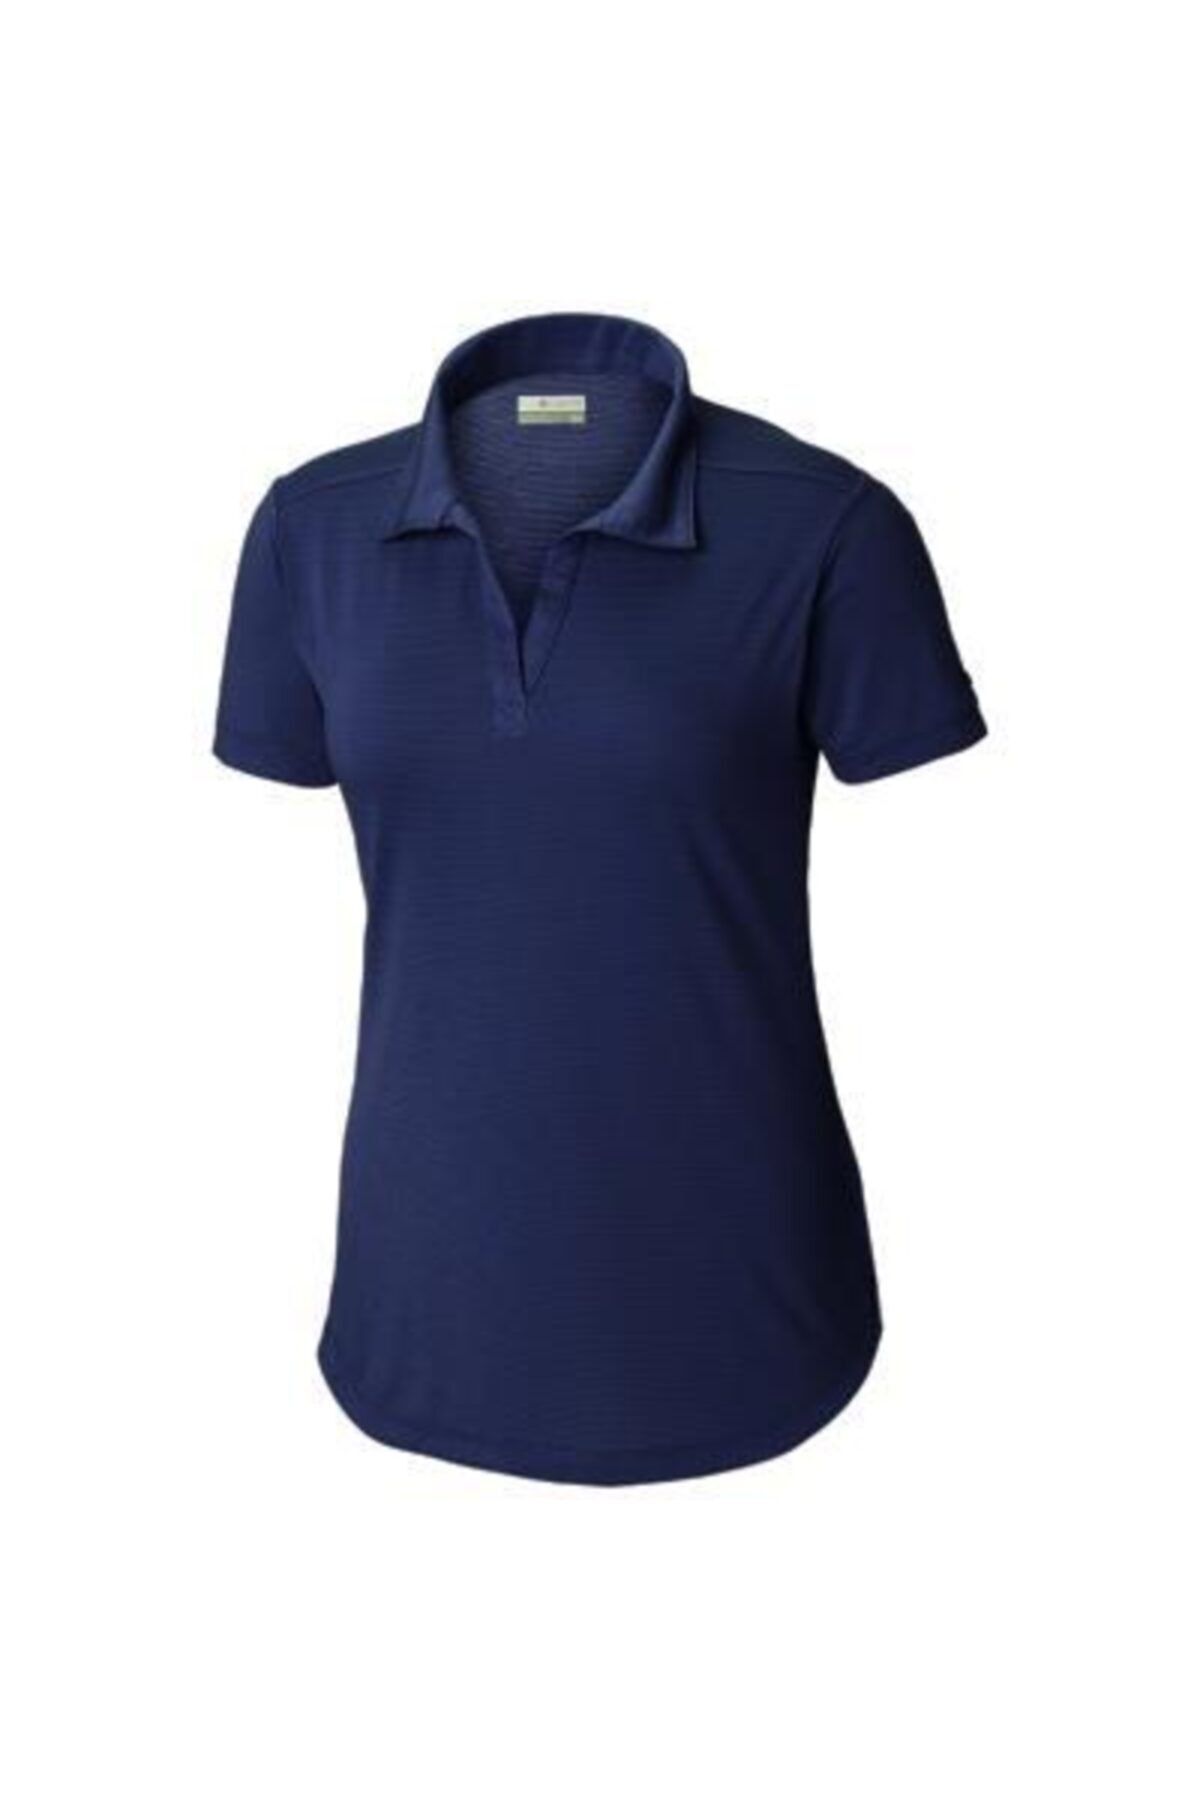 Columbia Kadın T-Shirt Mavi - Anytıme Casual Polo - 1837051466